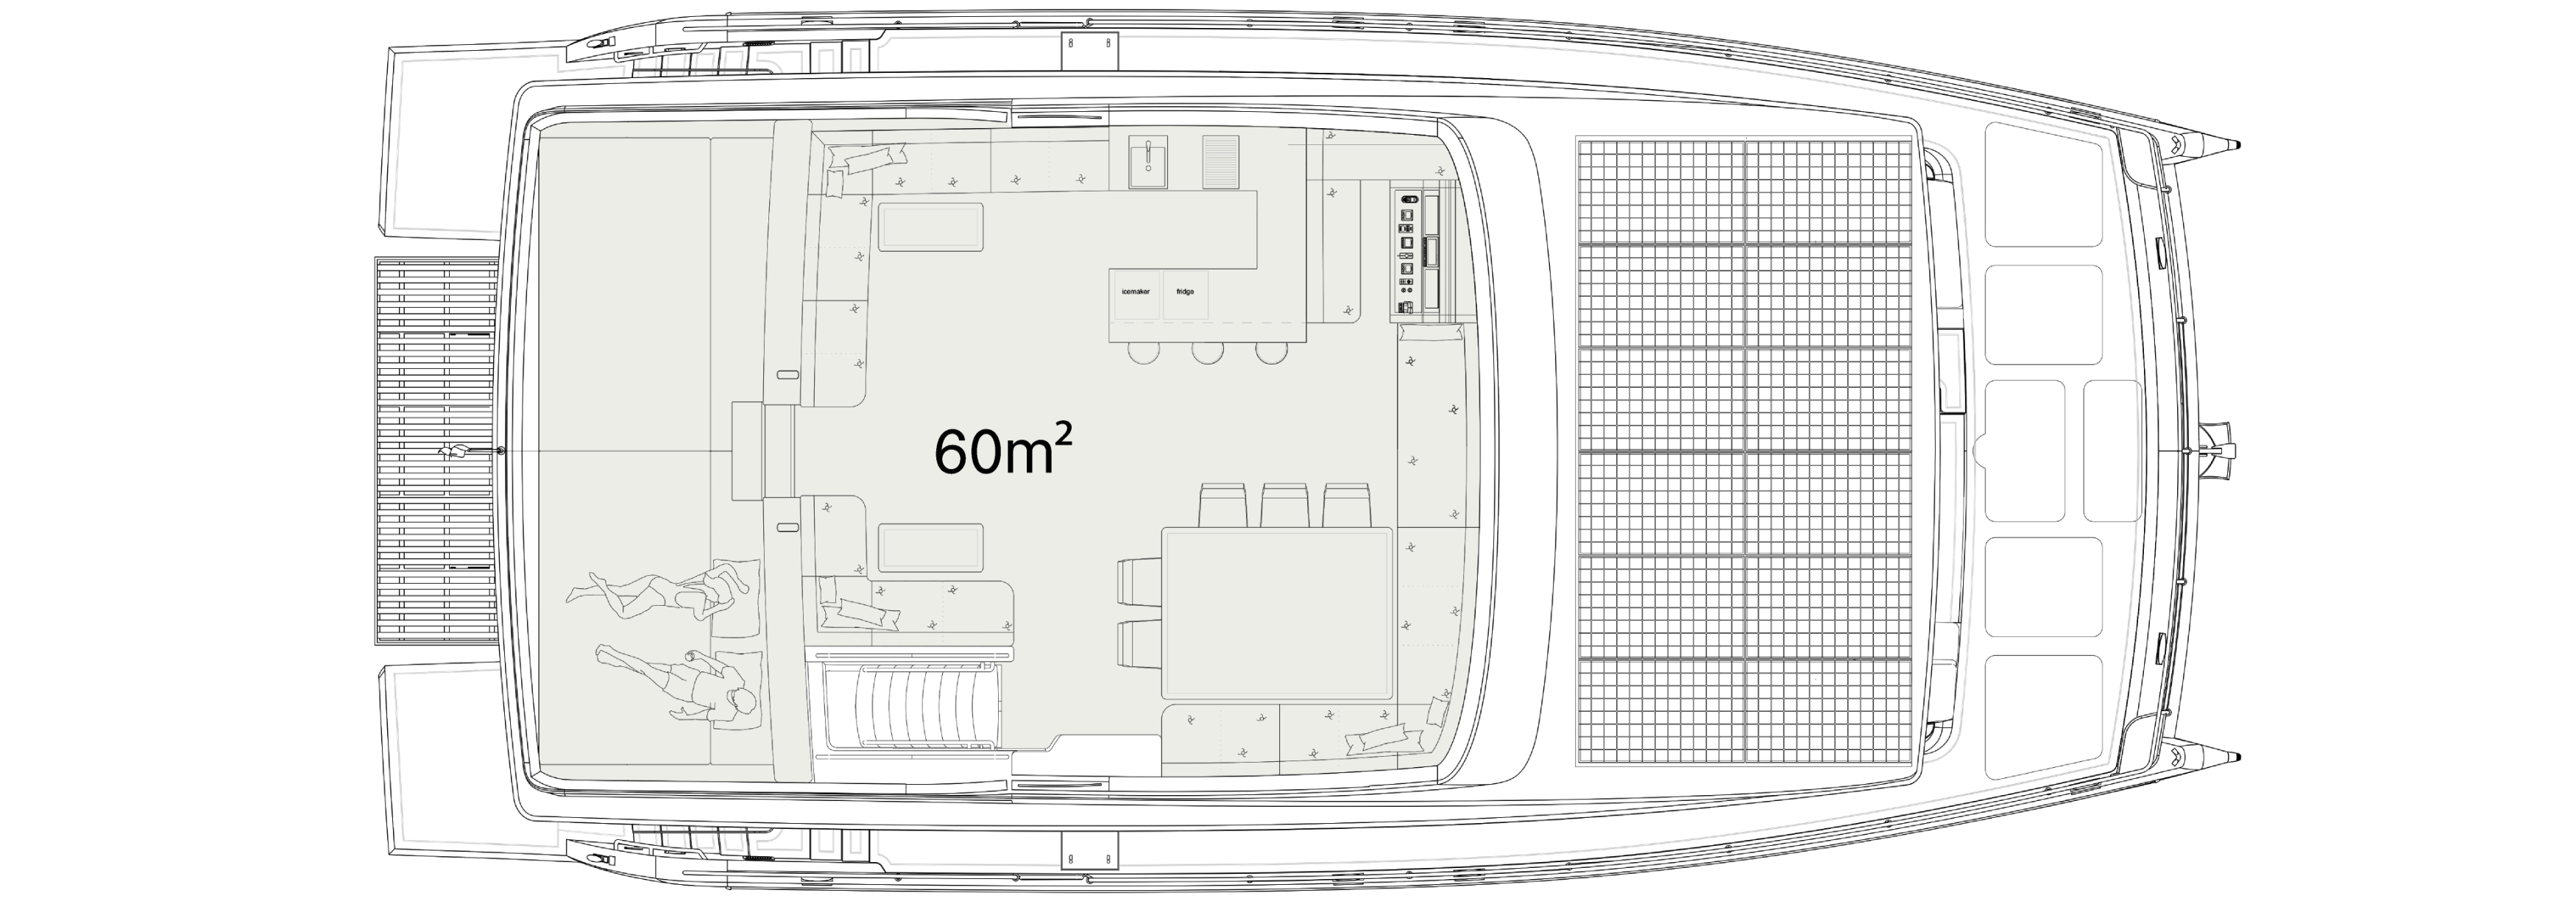 Yacht sky lounge area plan